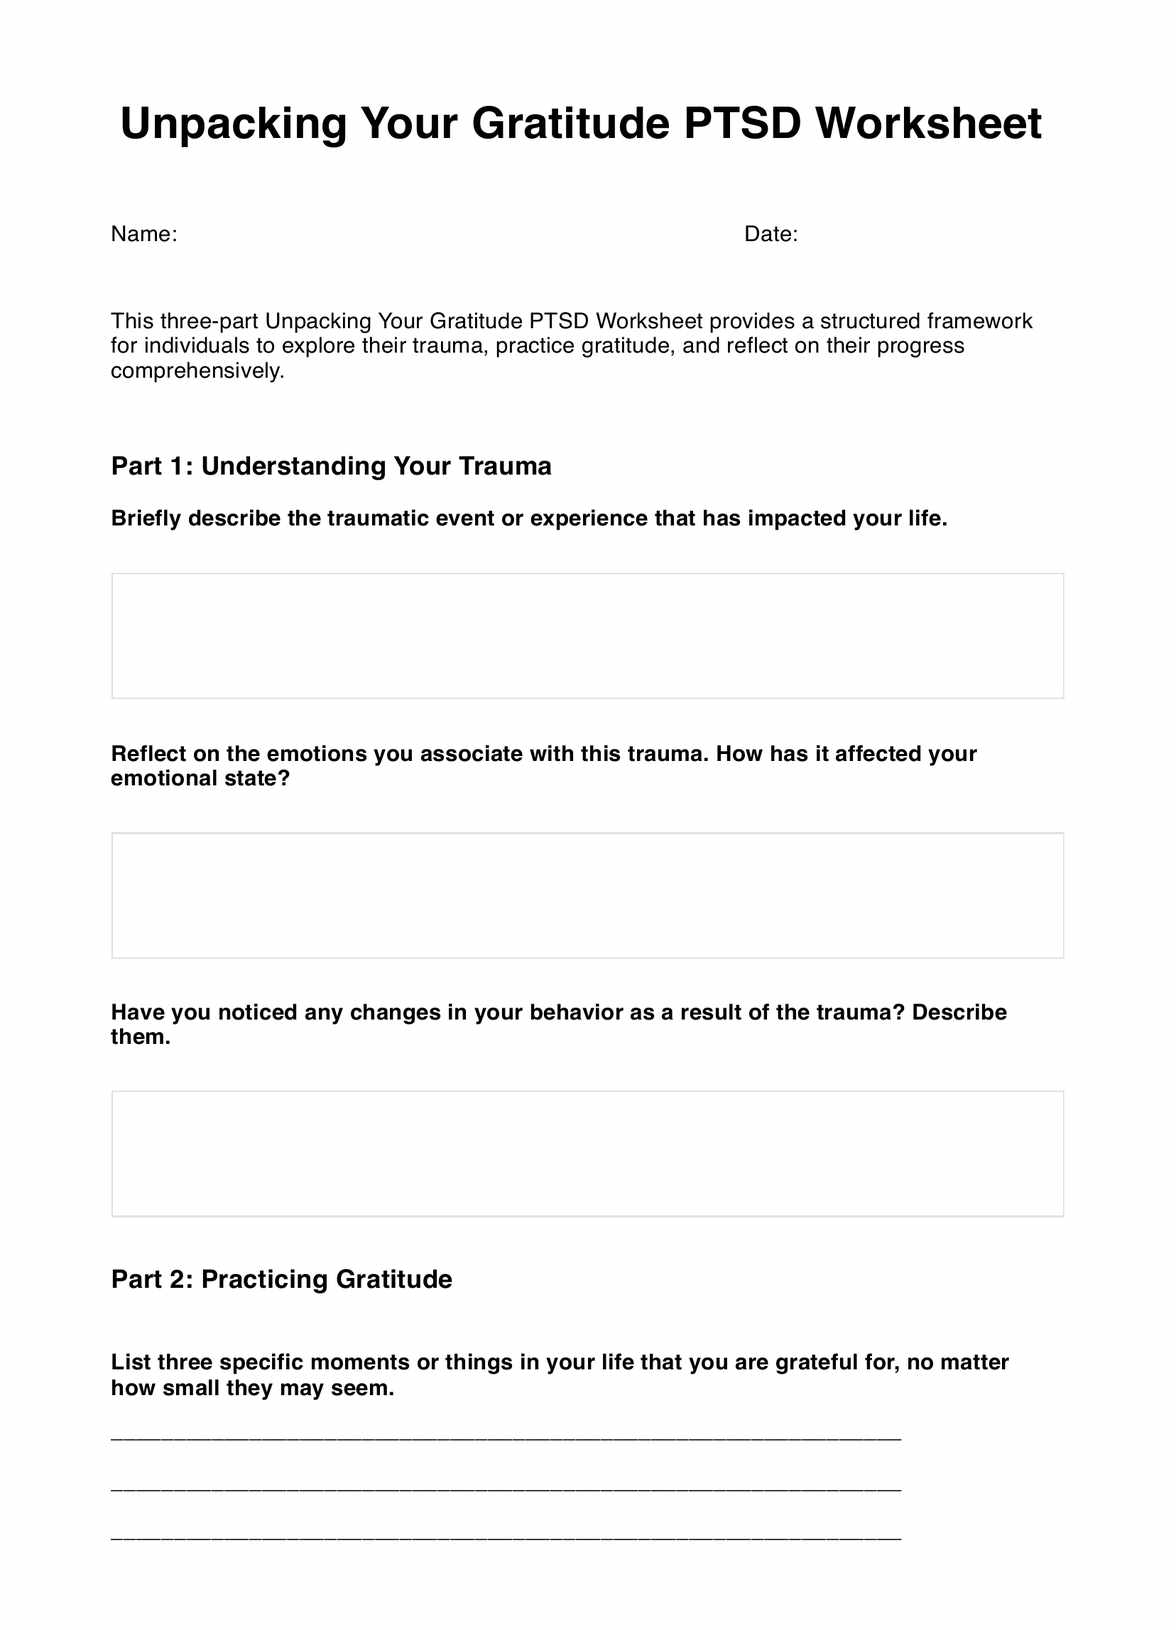 Unpacking Your Gratitude PTSD Worksheet PDF Example